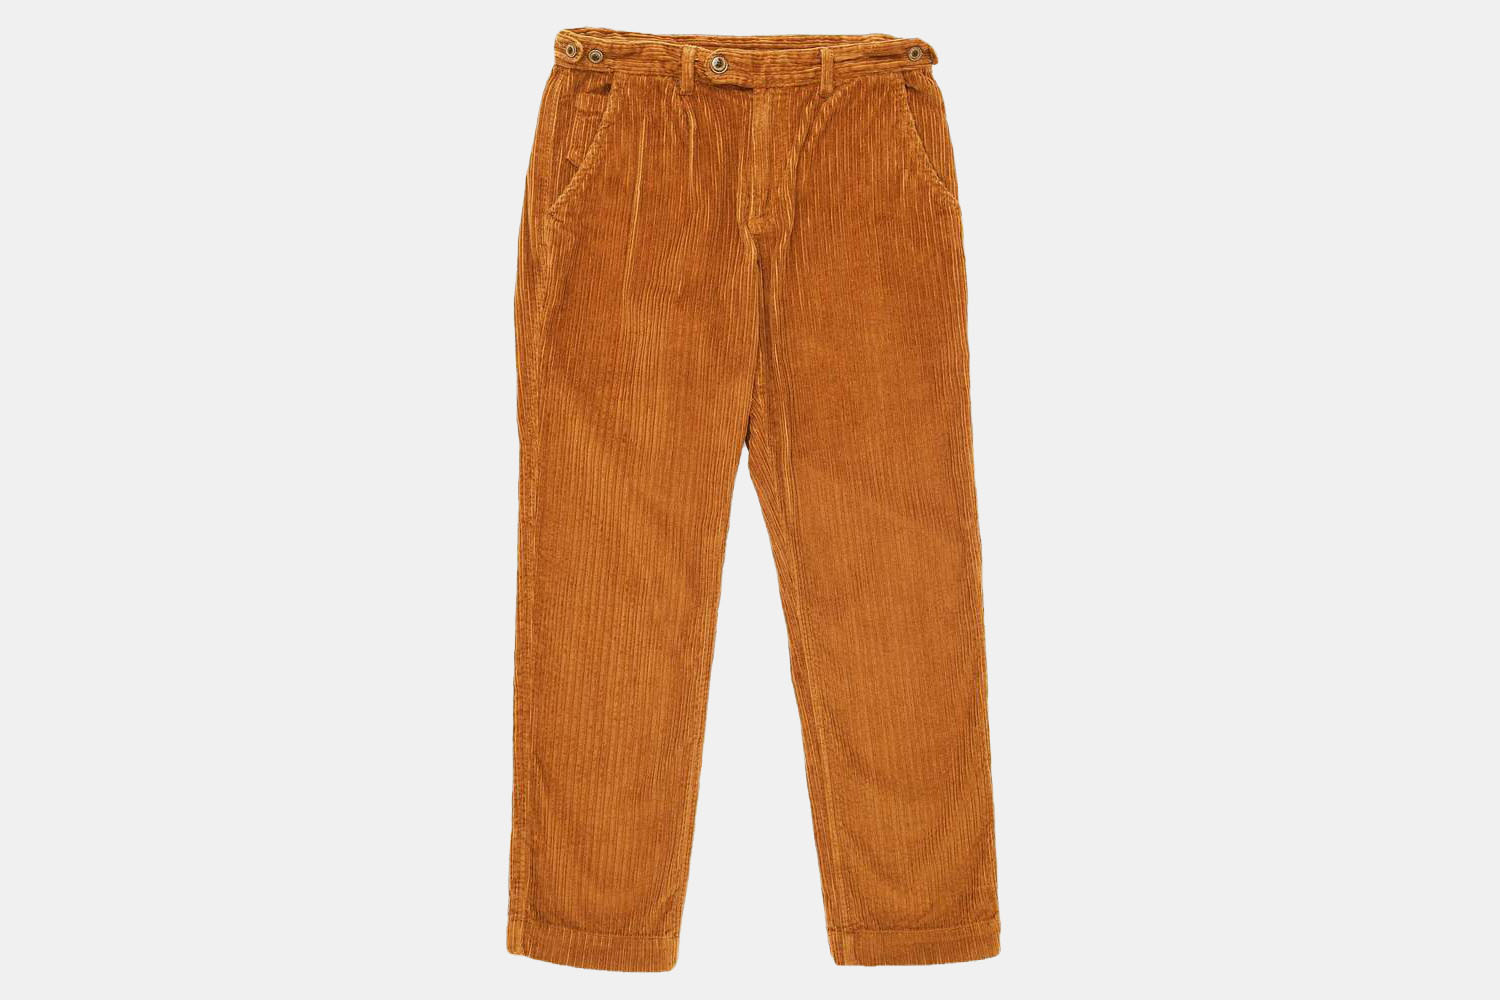 a pair of corduroy pants 